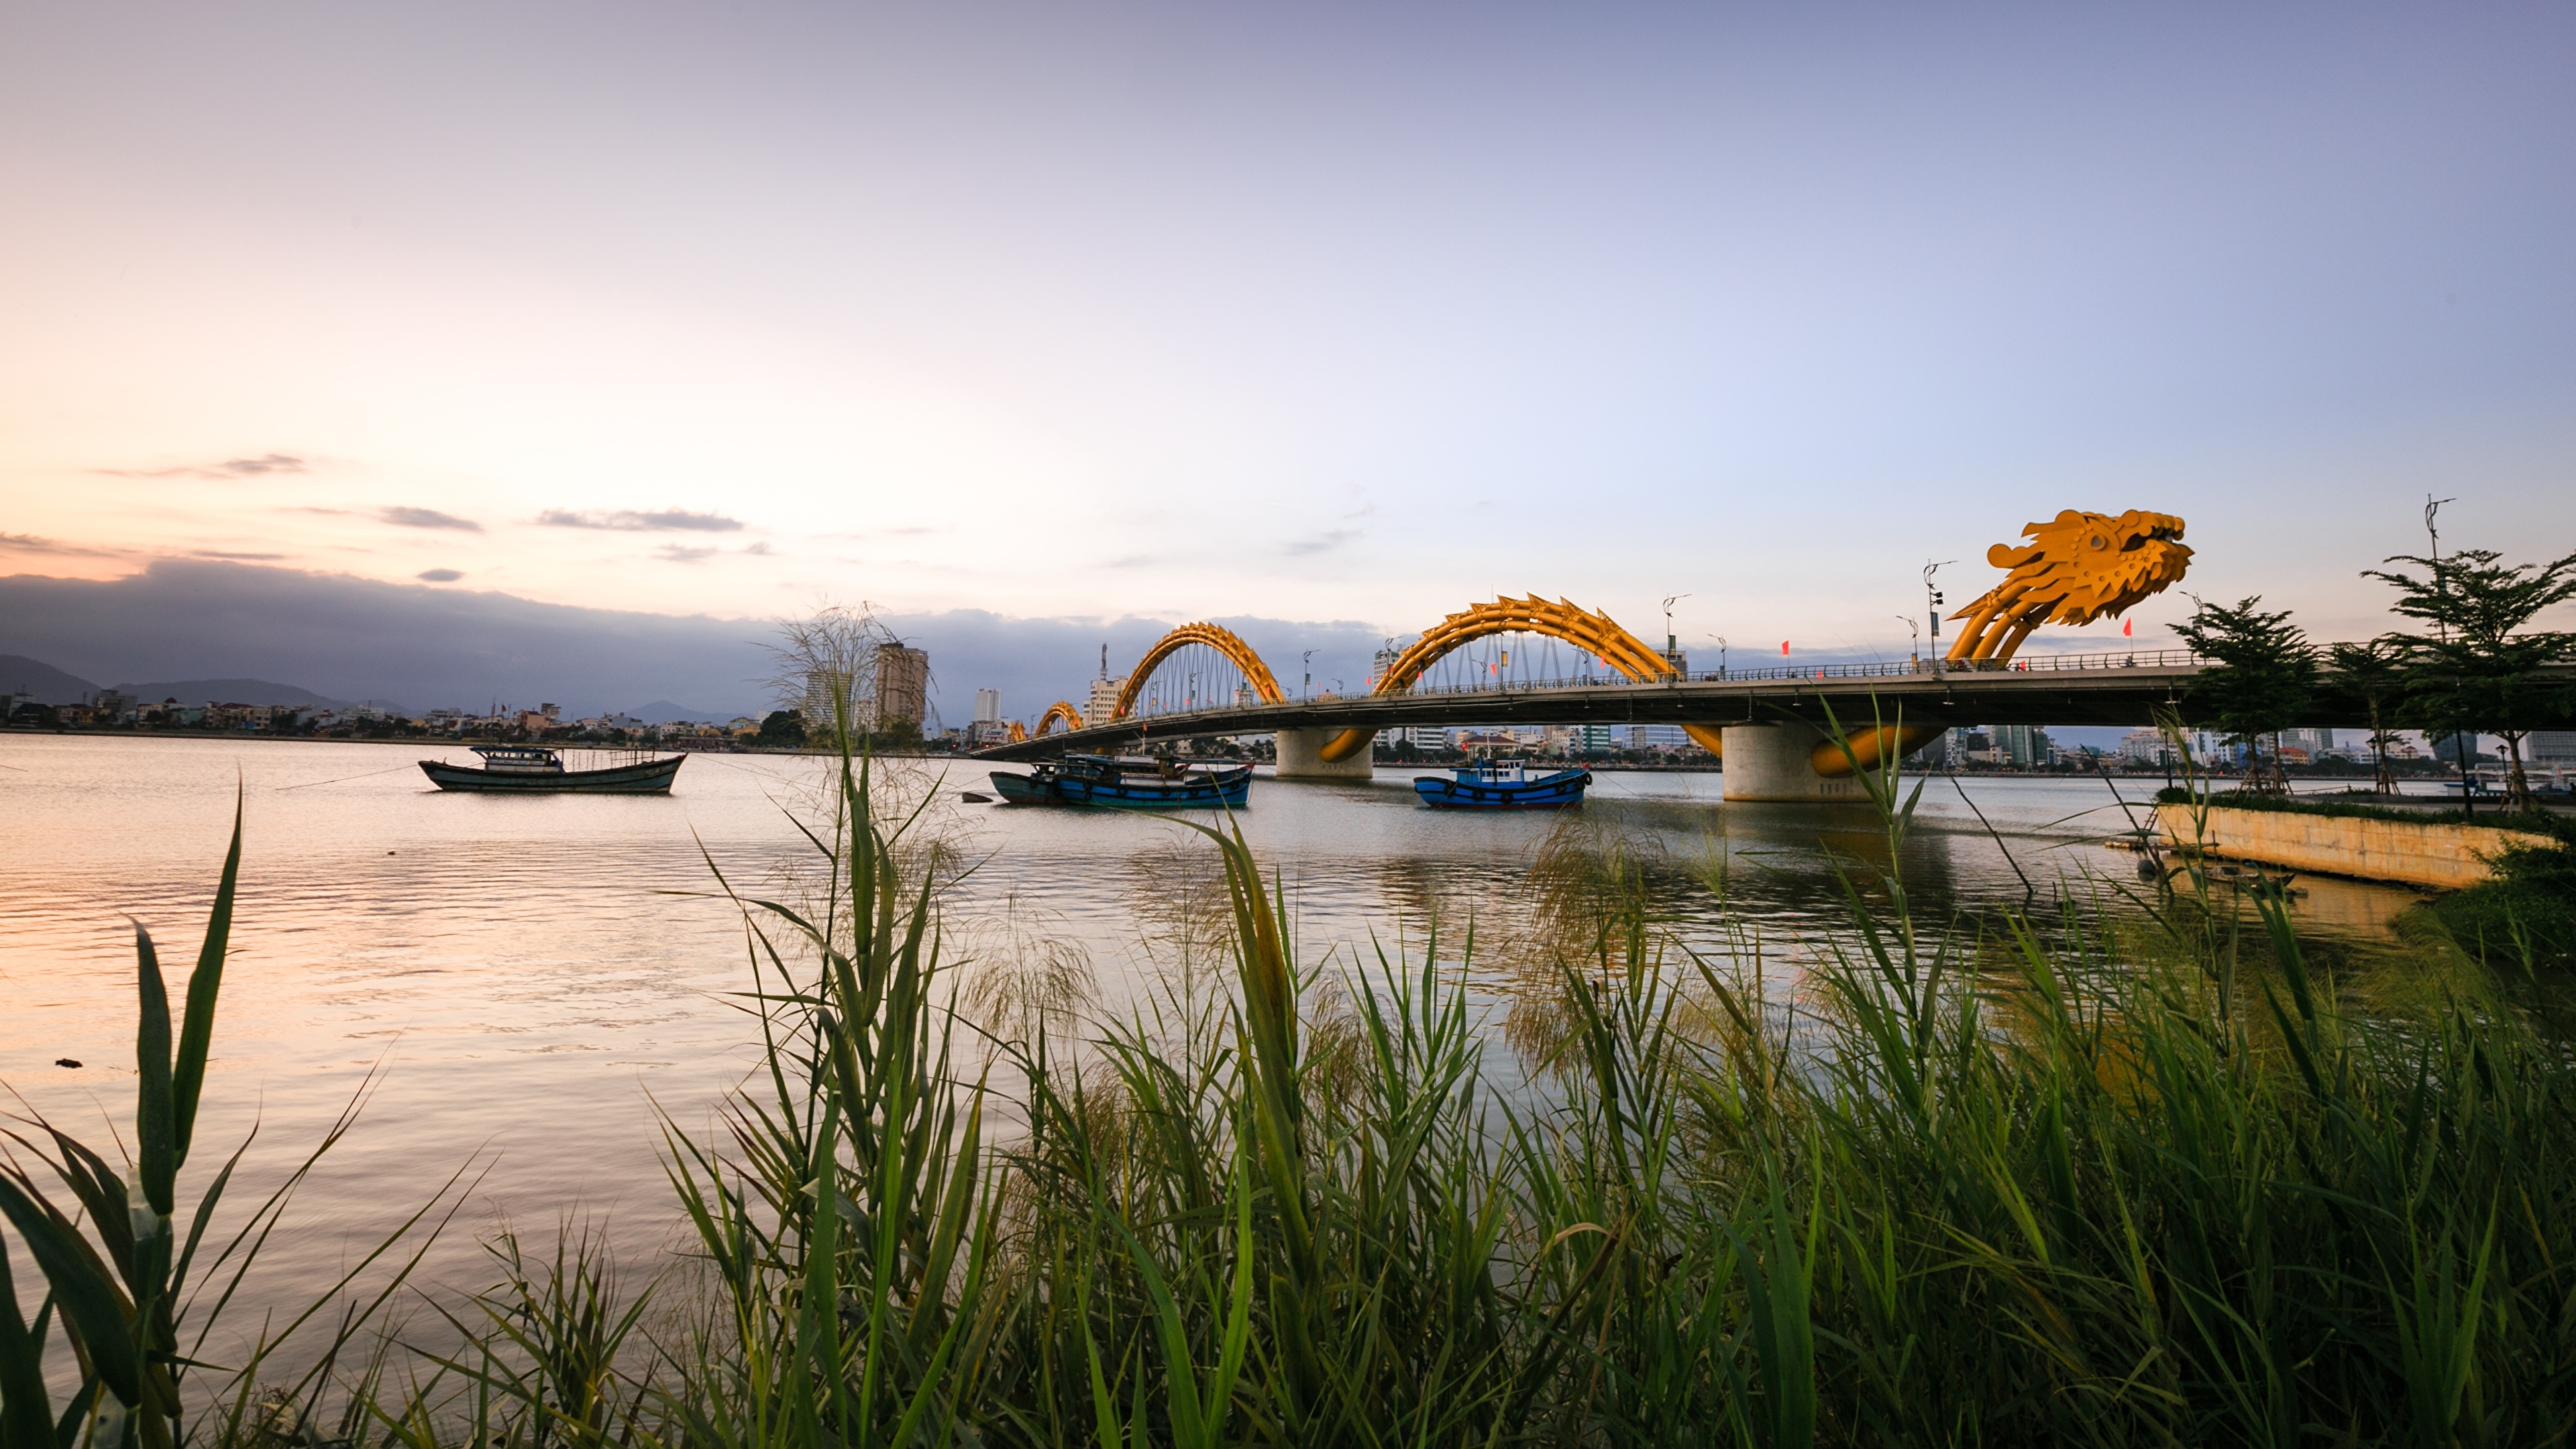 Картинка Драконы Вьетнам Dragon Bridge, Danang Мосты Речные суда Реки траве город 3840x2160 дракон мост река речка Трава Города